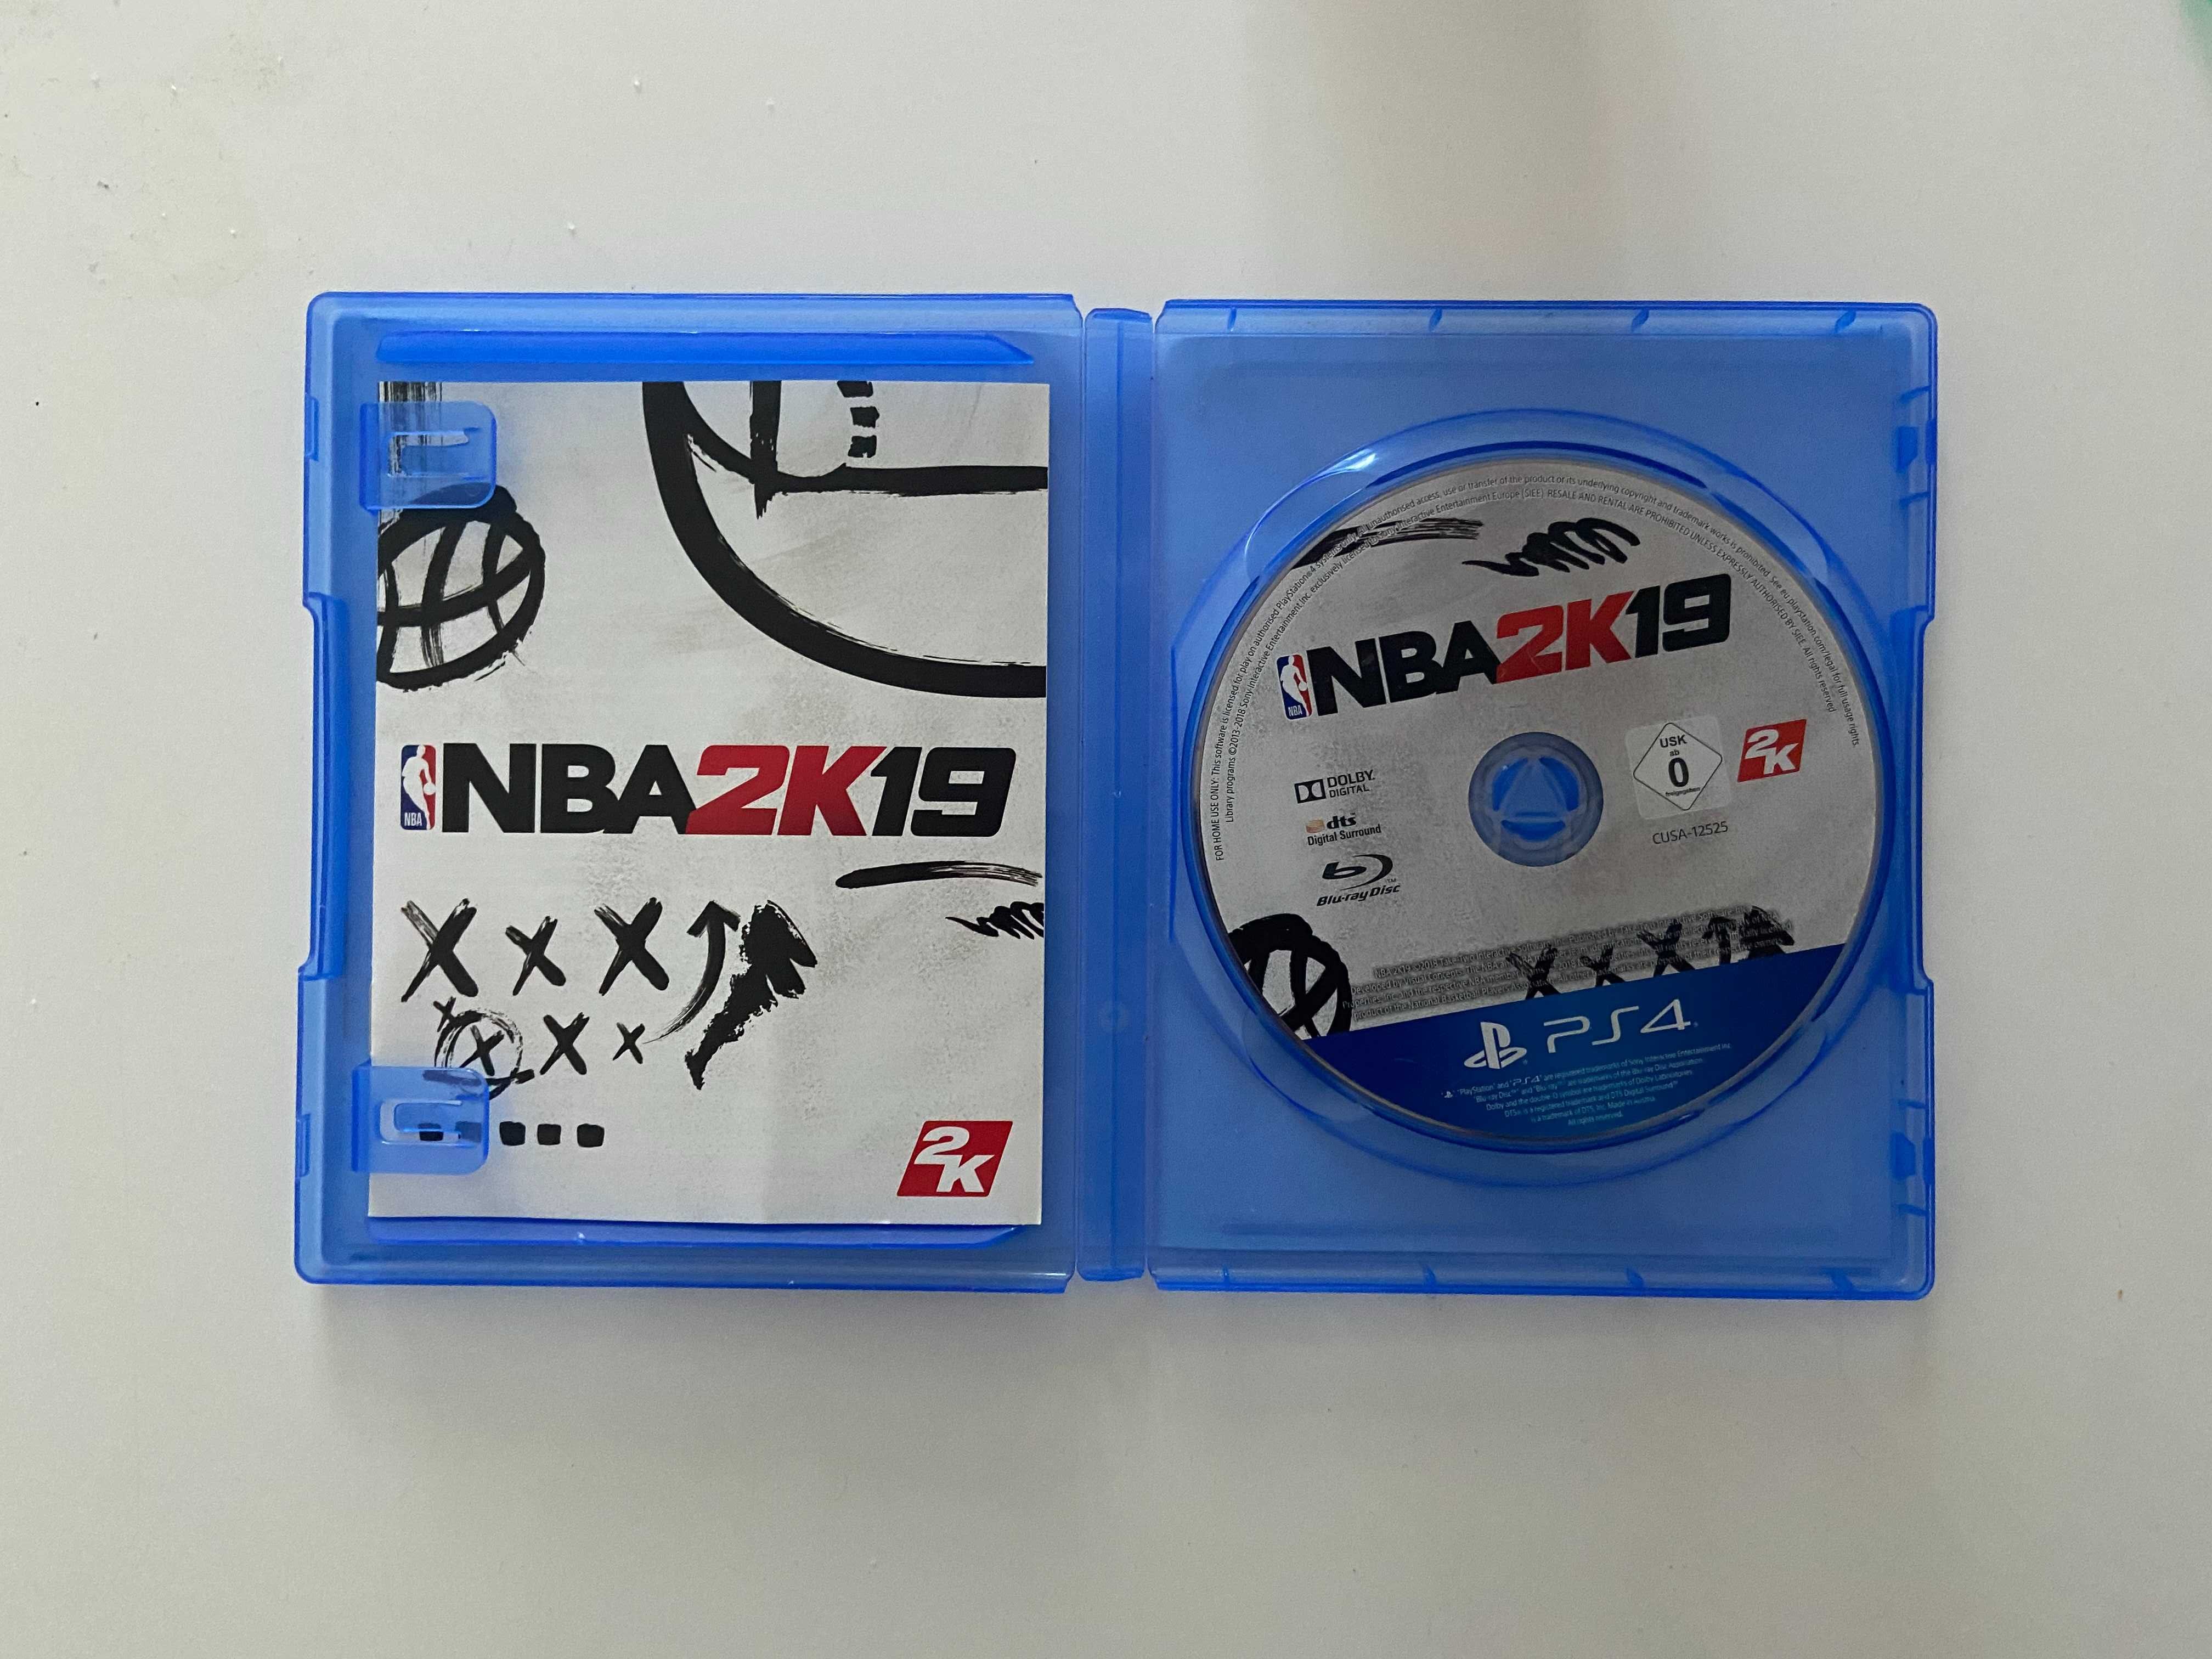 NBA 2k19 PS4 2019 Playstation 4 Koszykówka Gra 19